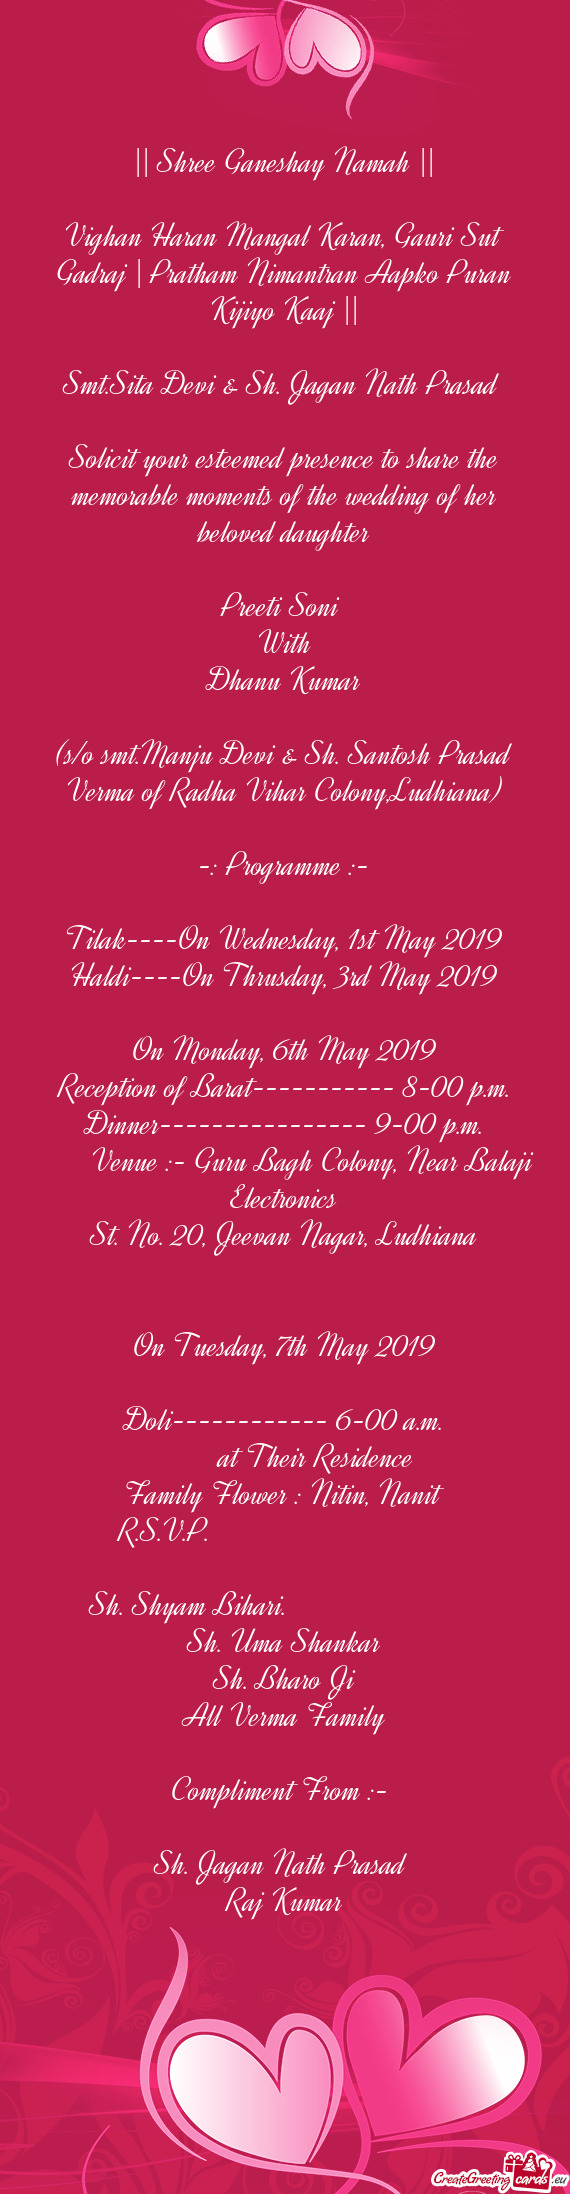 Tilak----On Wednesday, 1st May 2019